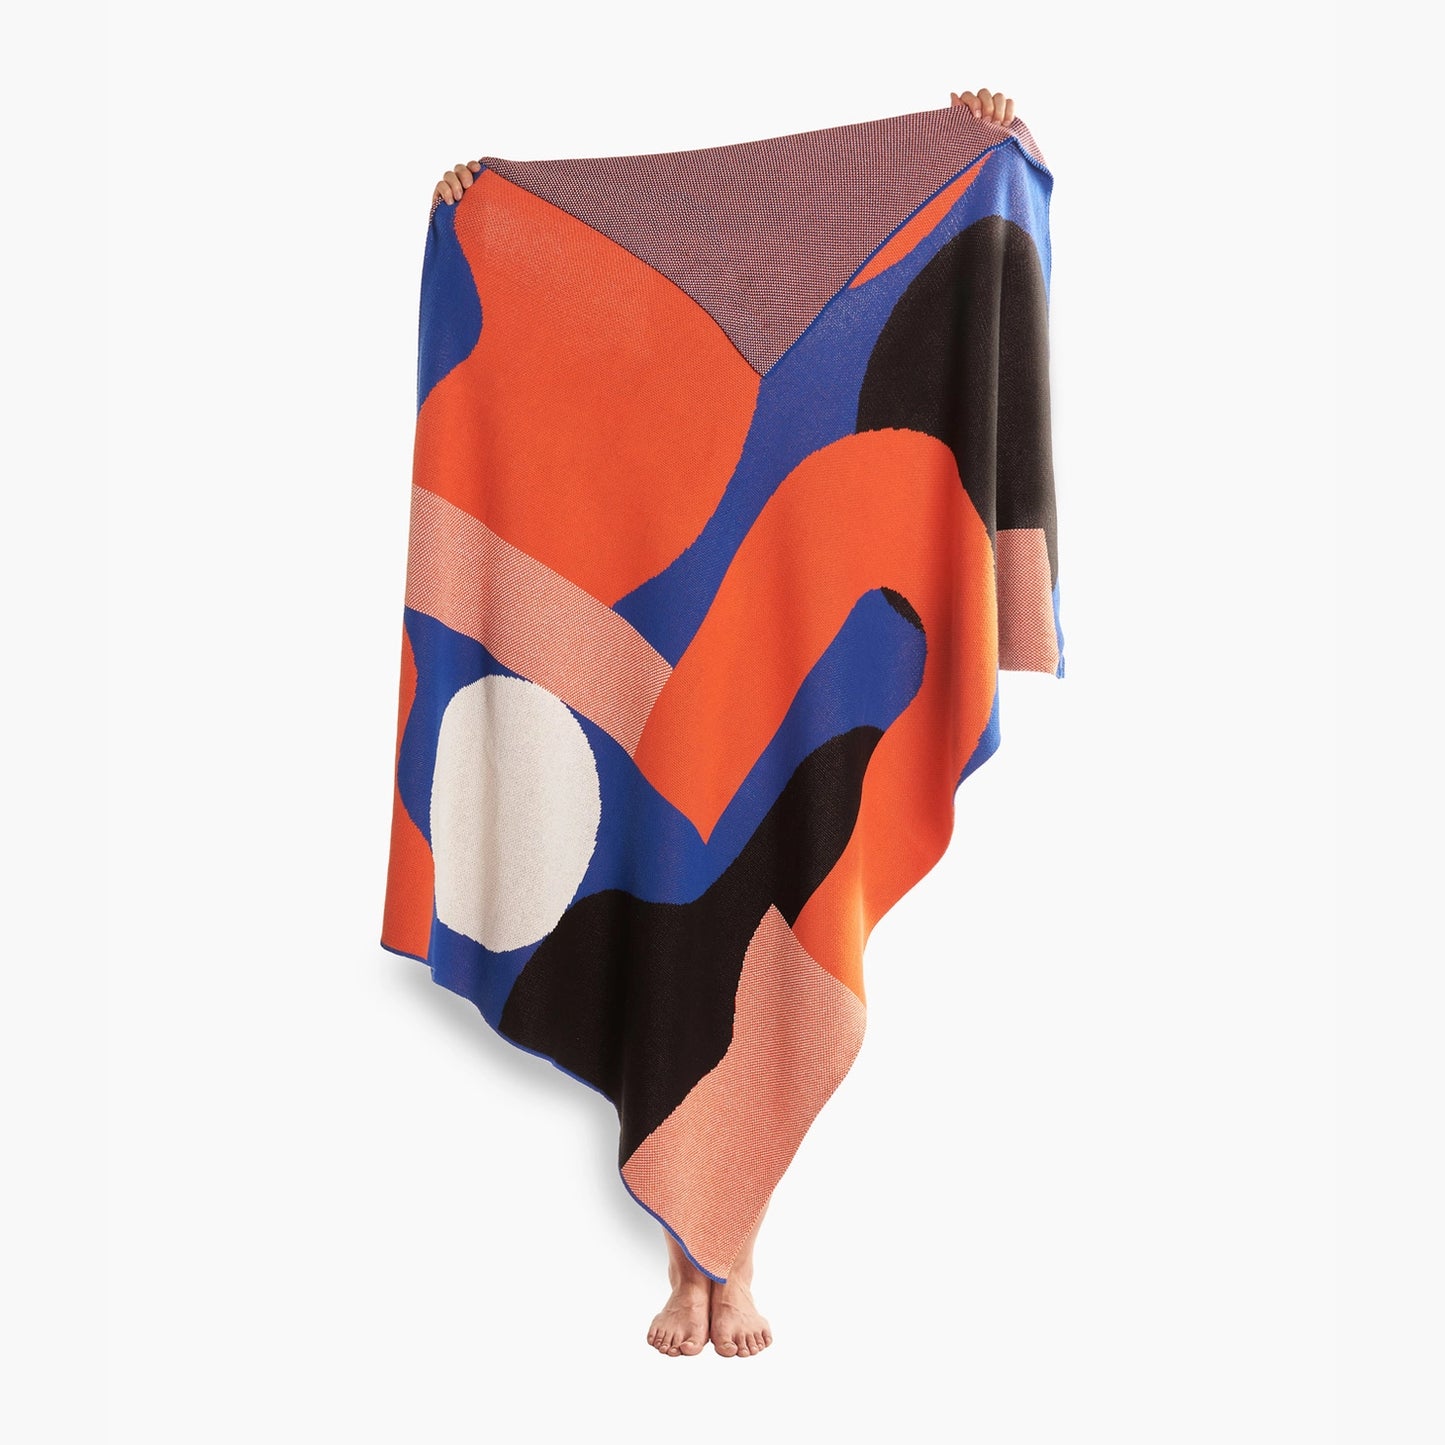 Bebe Knit blanket- recycled blend - size large